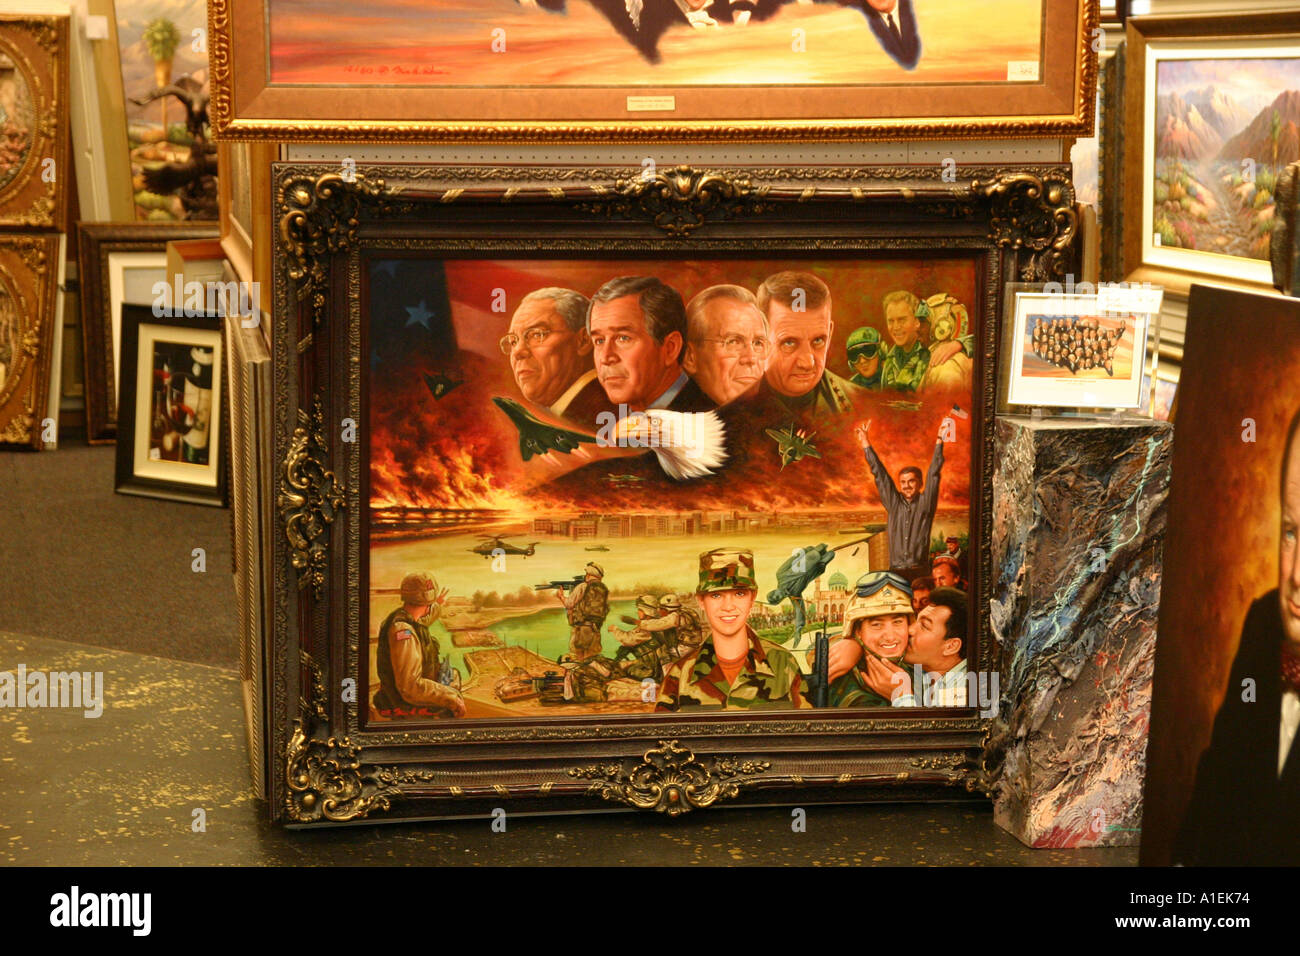 Operation Iraqi Freedom Painting Stock Photo